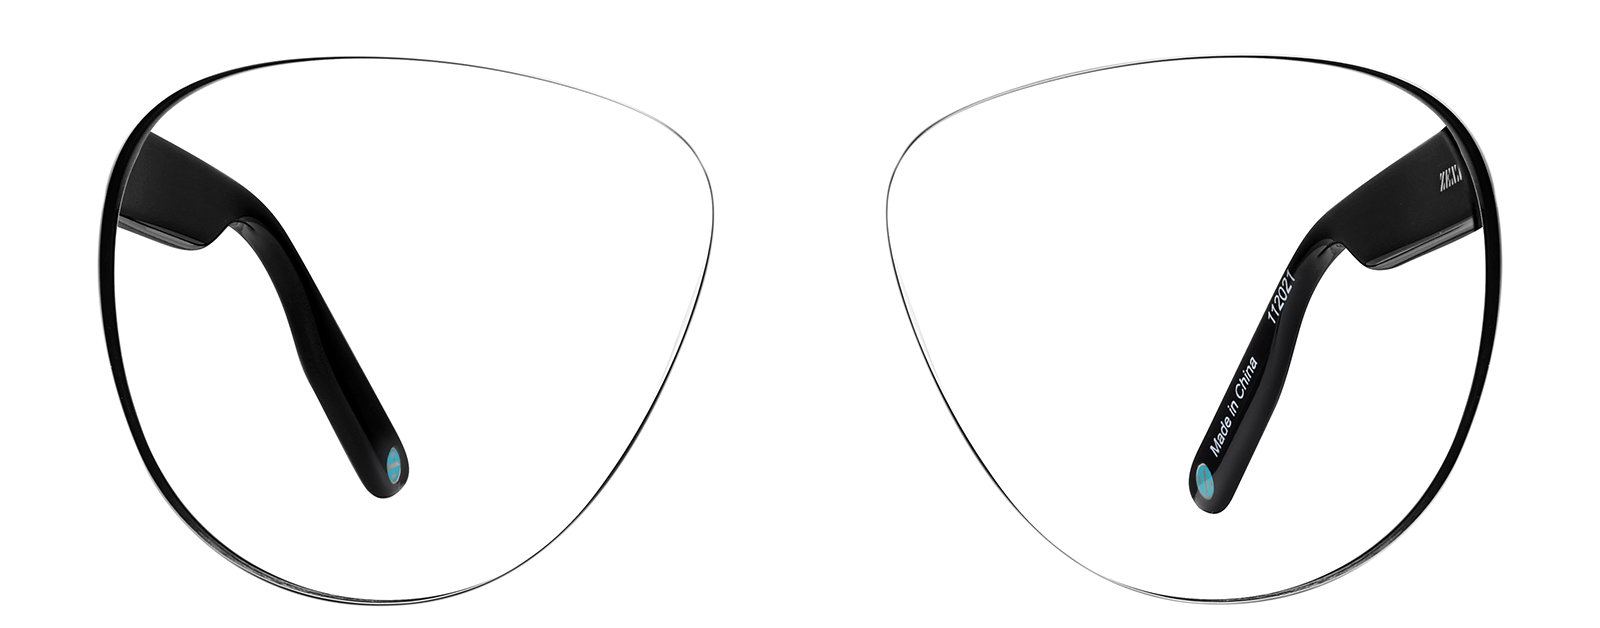 Premium Cat-Eye Sunglasseslens arm image